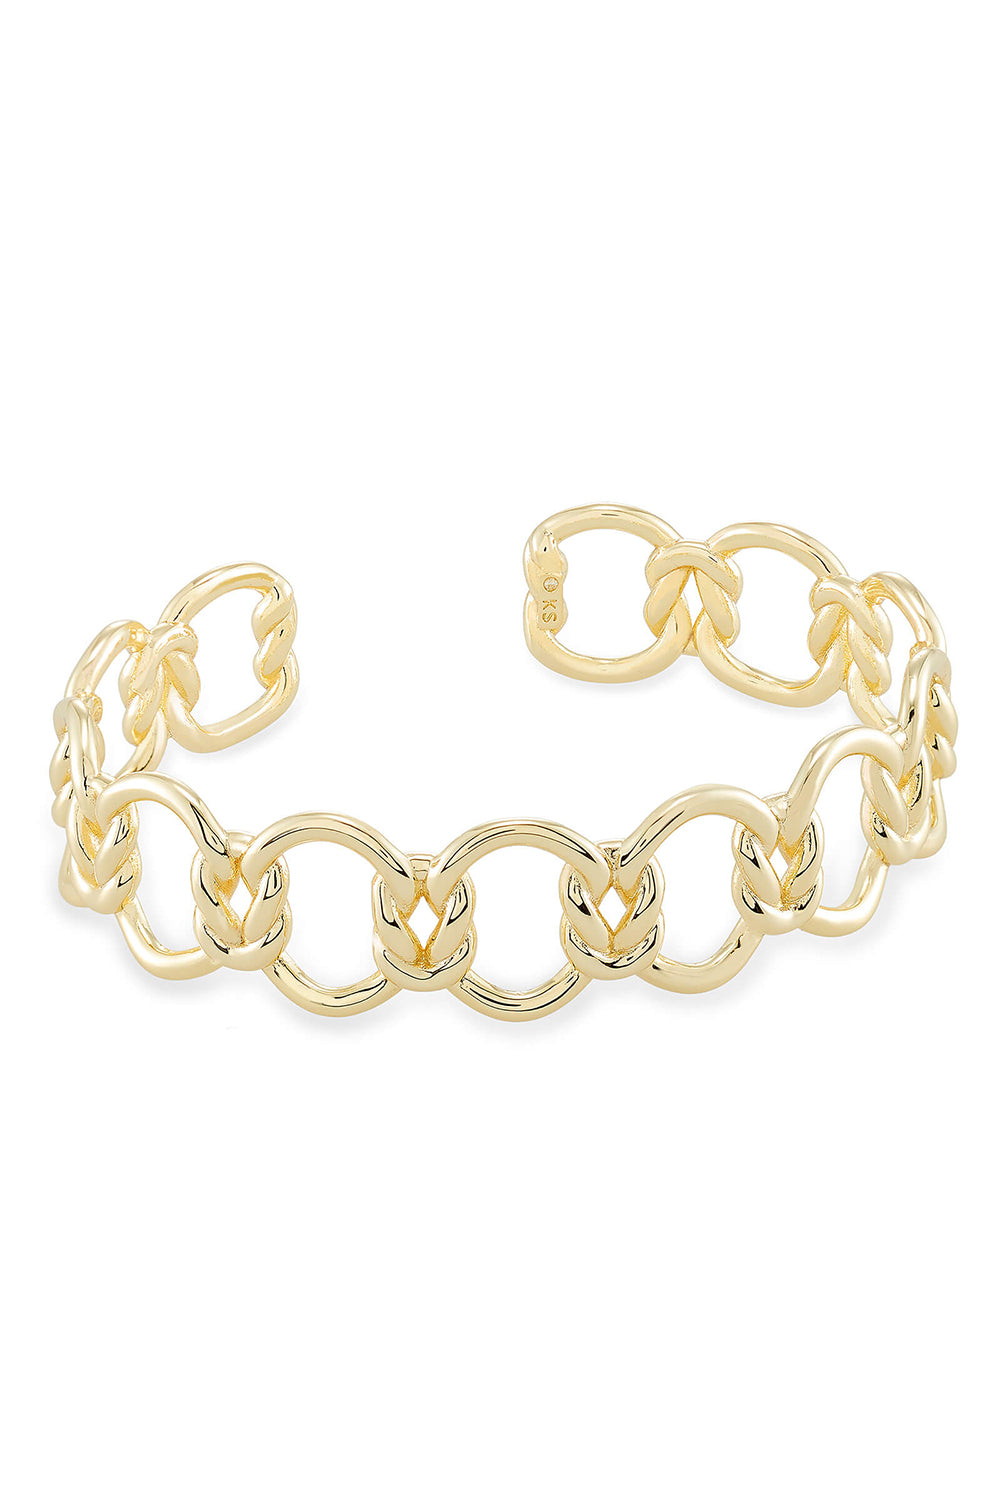 Emilie Gold Chain Bracelet in Iridescent Drusy